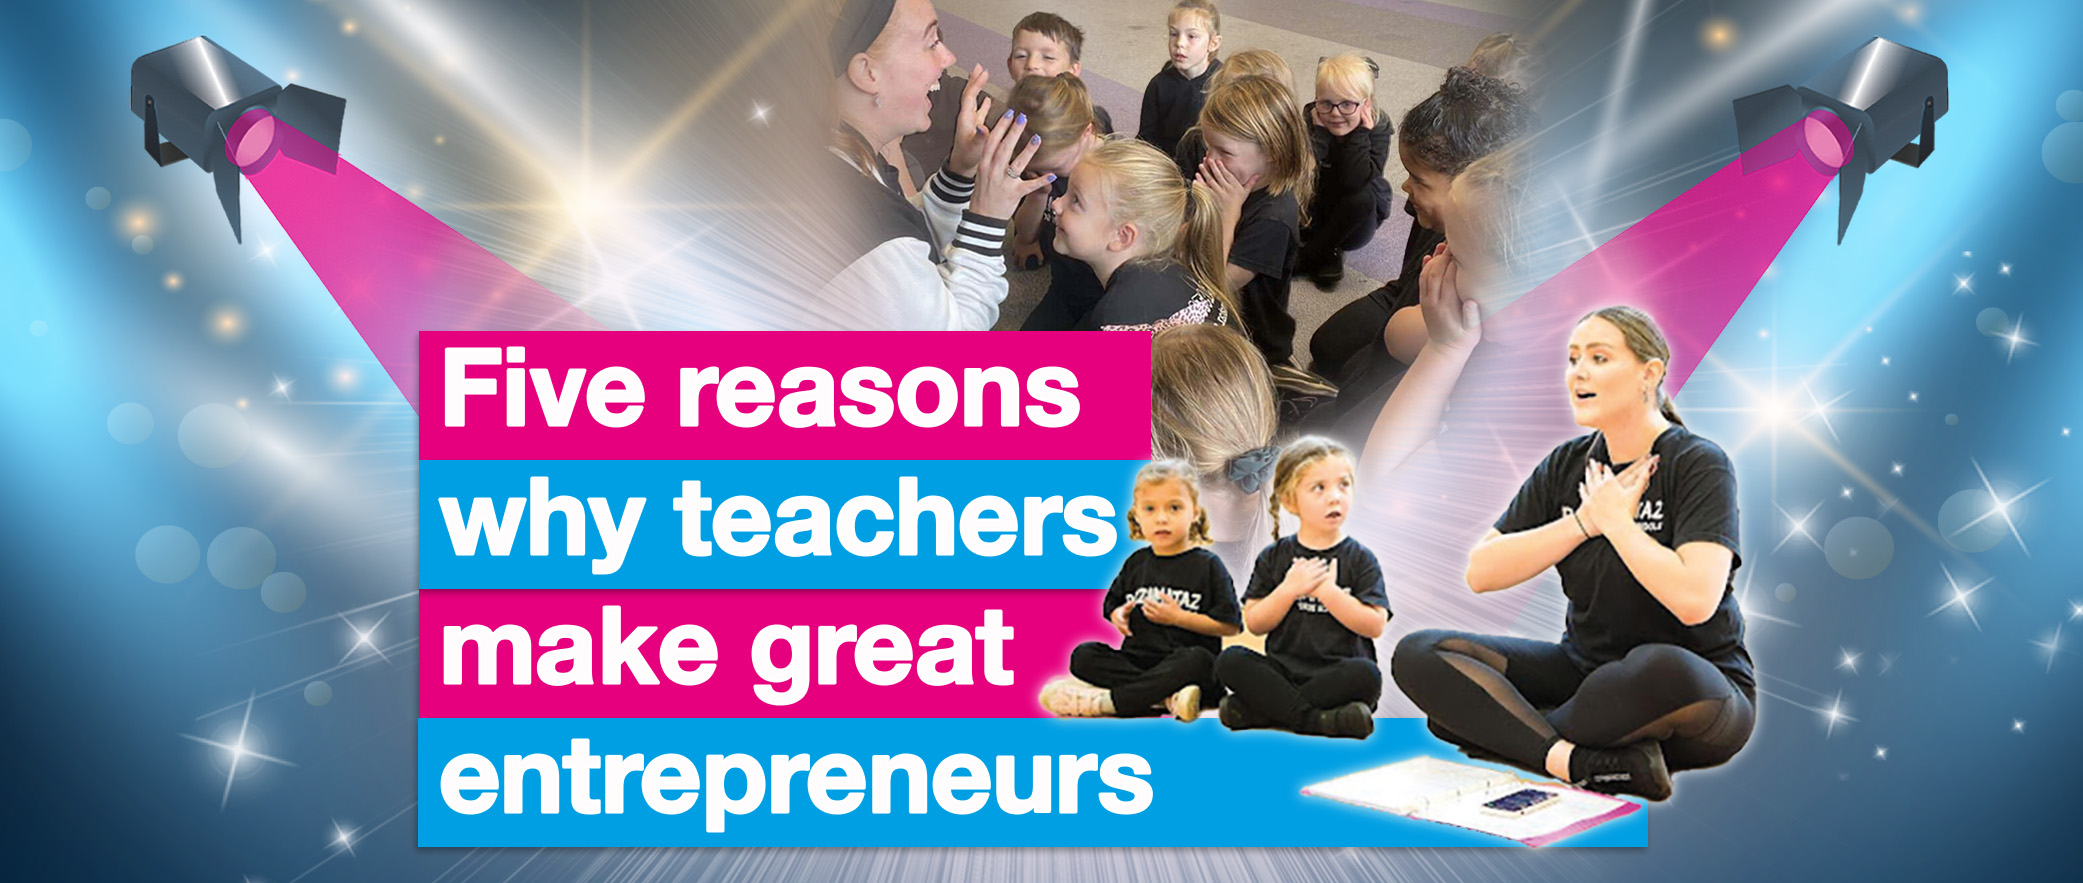 Five reasons why teachers make great entrepreneurs